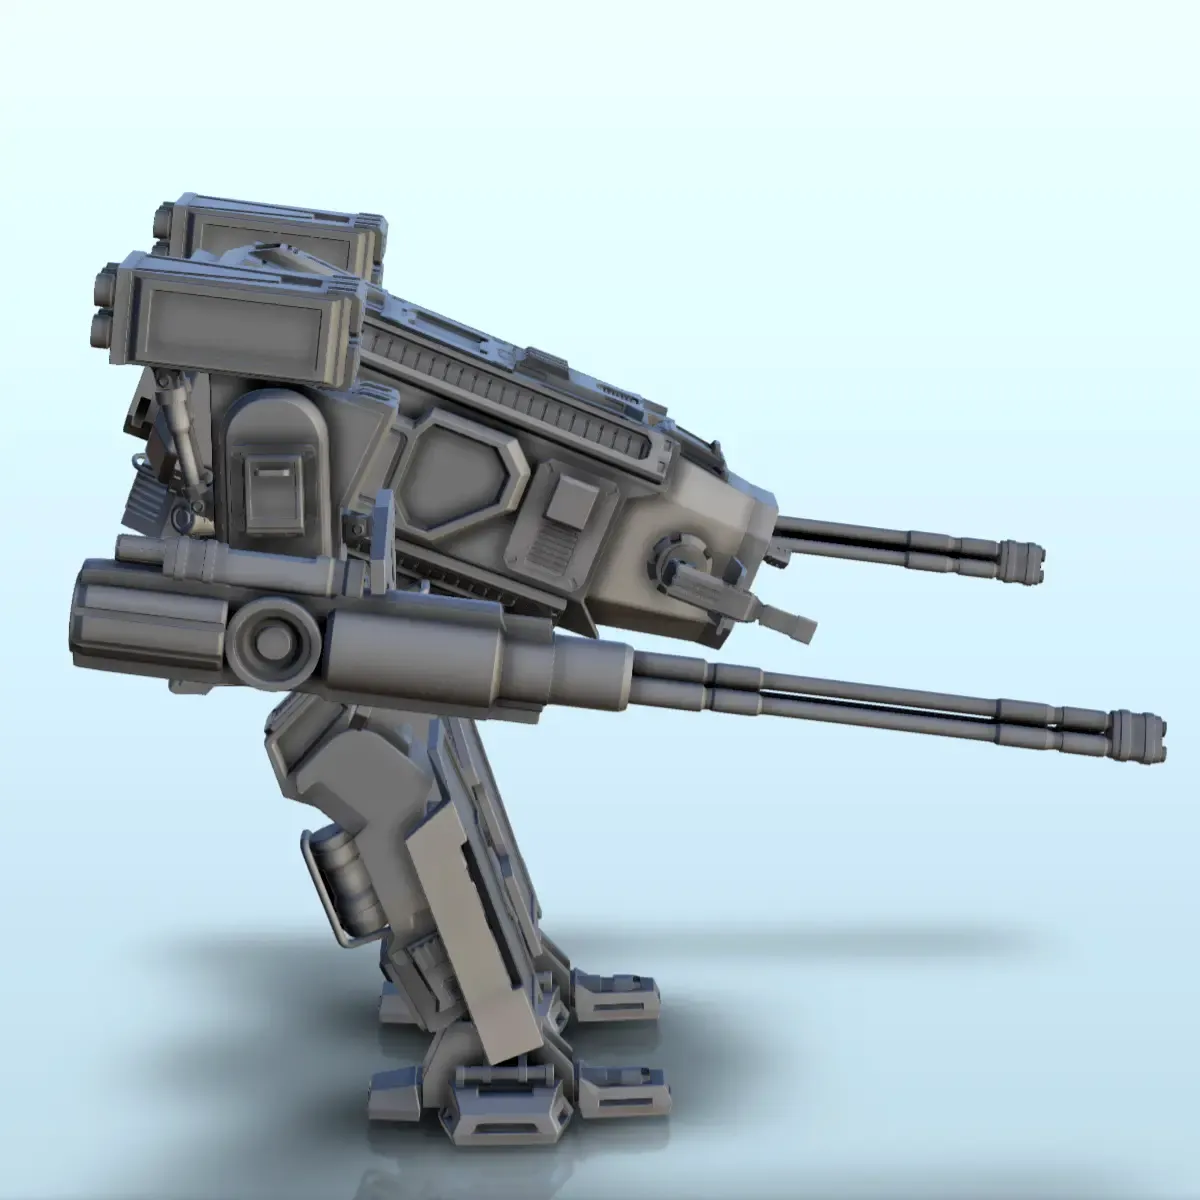 Xilmis combat robot (24) - sci-fi science fiction future 40k